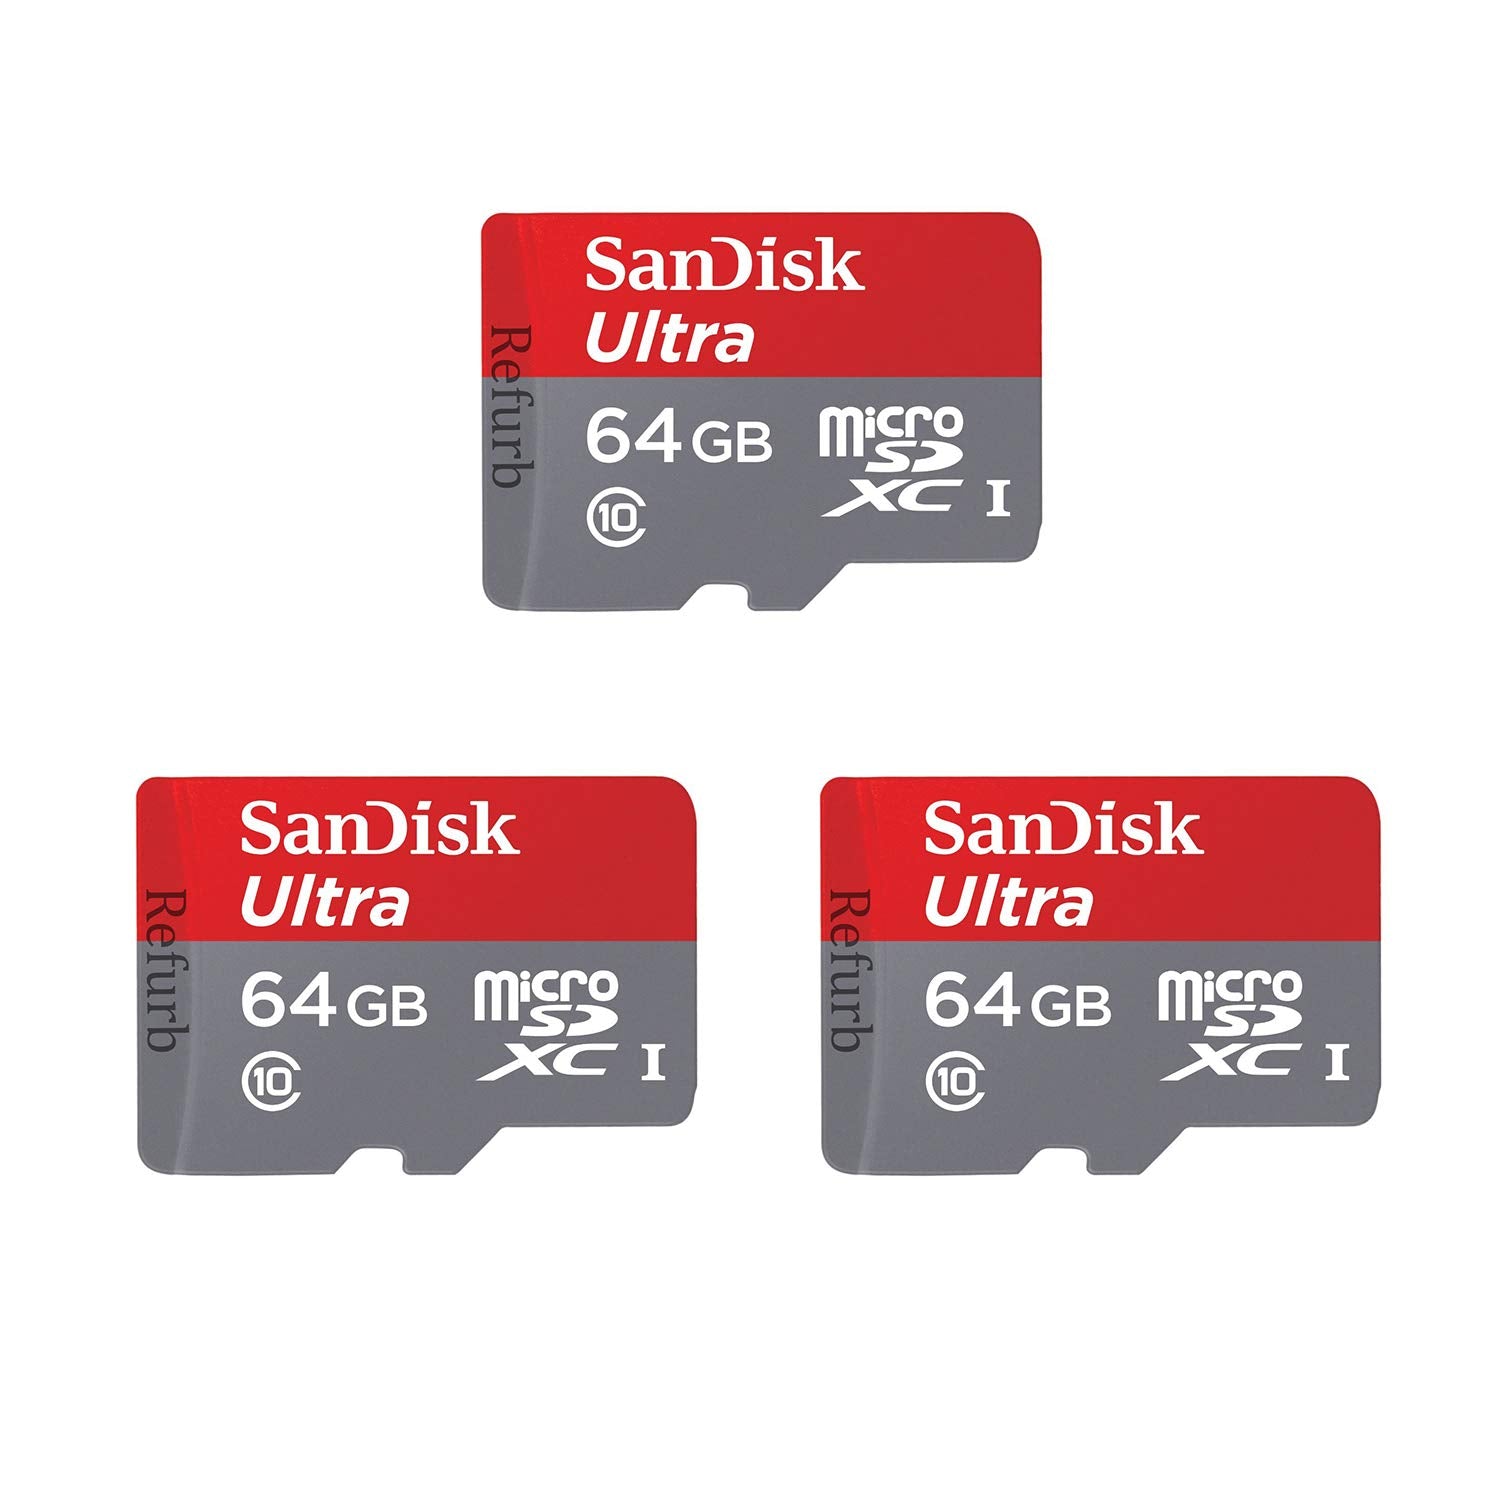 SanDisk Ultra 64GB MicroSDXC Class 10 UHS-1 SDSDQUA-064G-U46A (Certified Refurbished) (3 Pack)